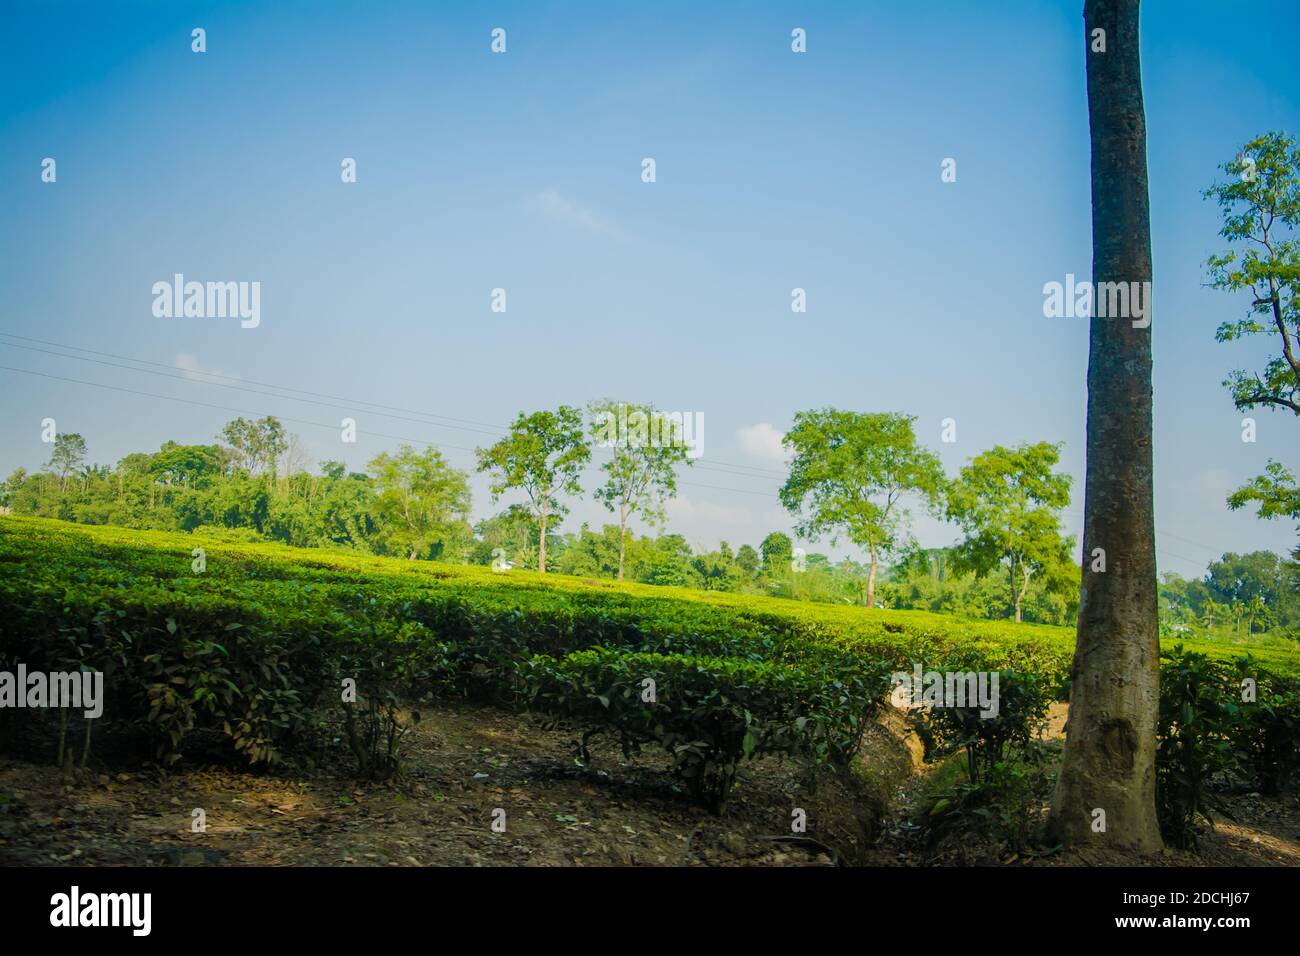 Green tea garden of Assam grown in lowland and Brahmaputra River Valley, Golaghat. Tea plantations Stock Photo